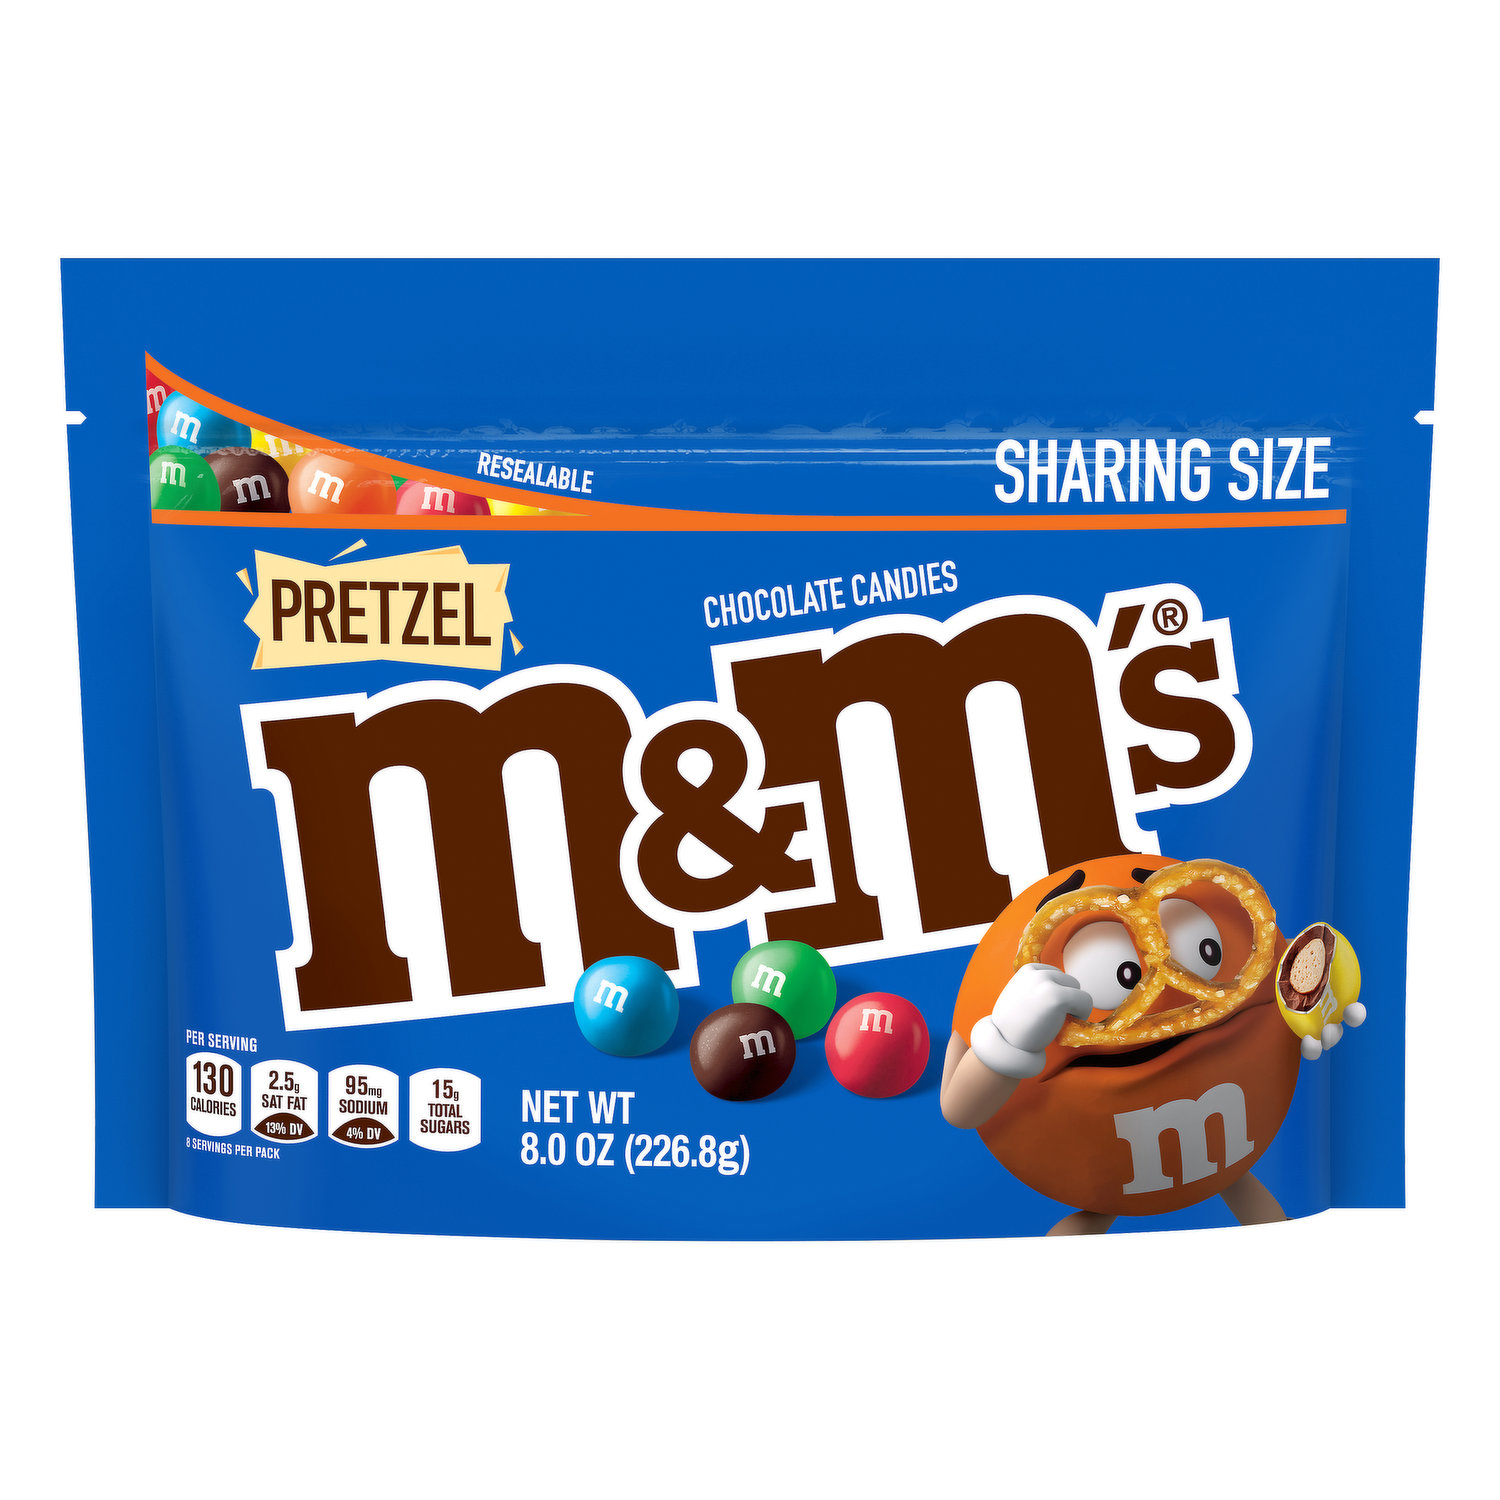 M&M'S Hazelnut Spread Christmas Candy, 8.0-Ounce Bag